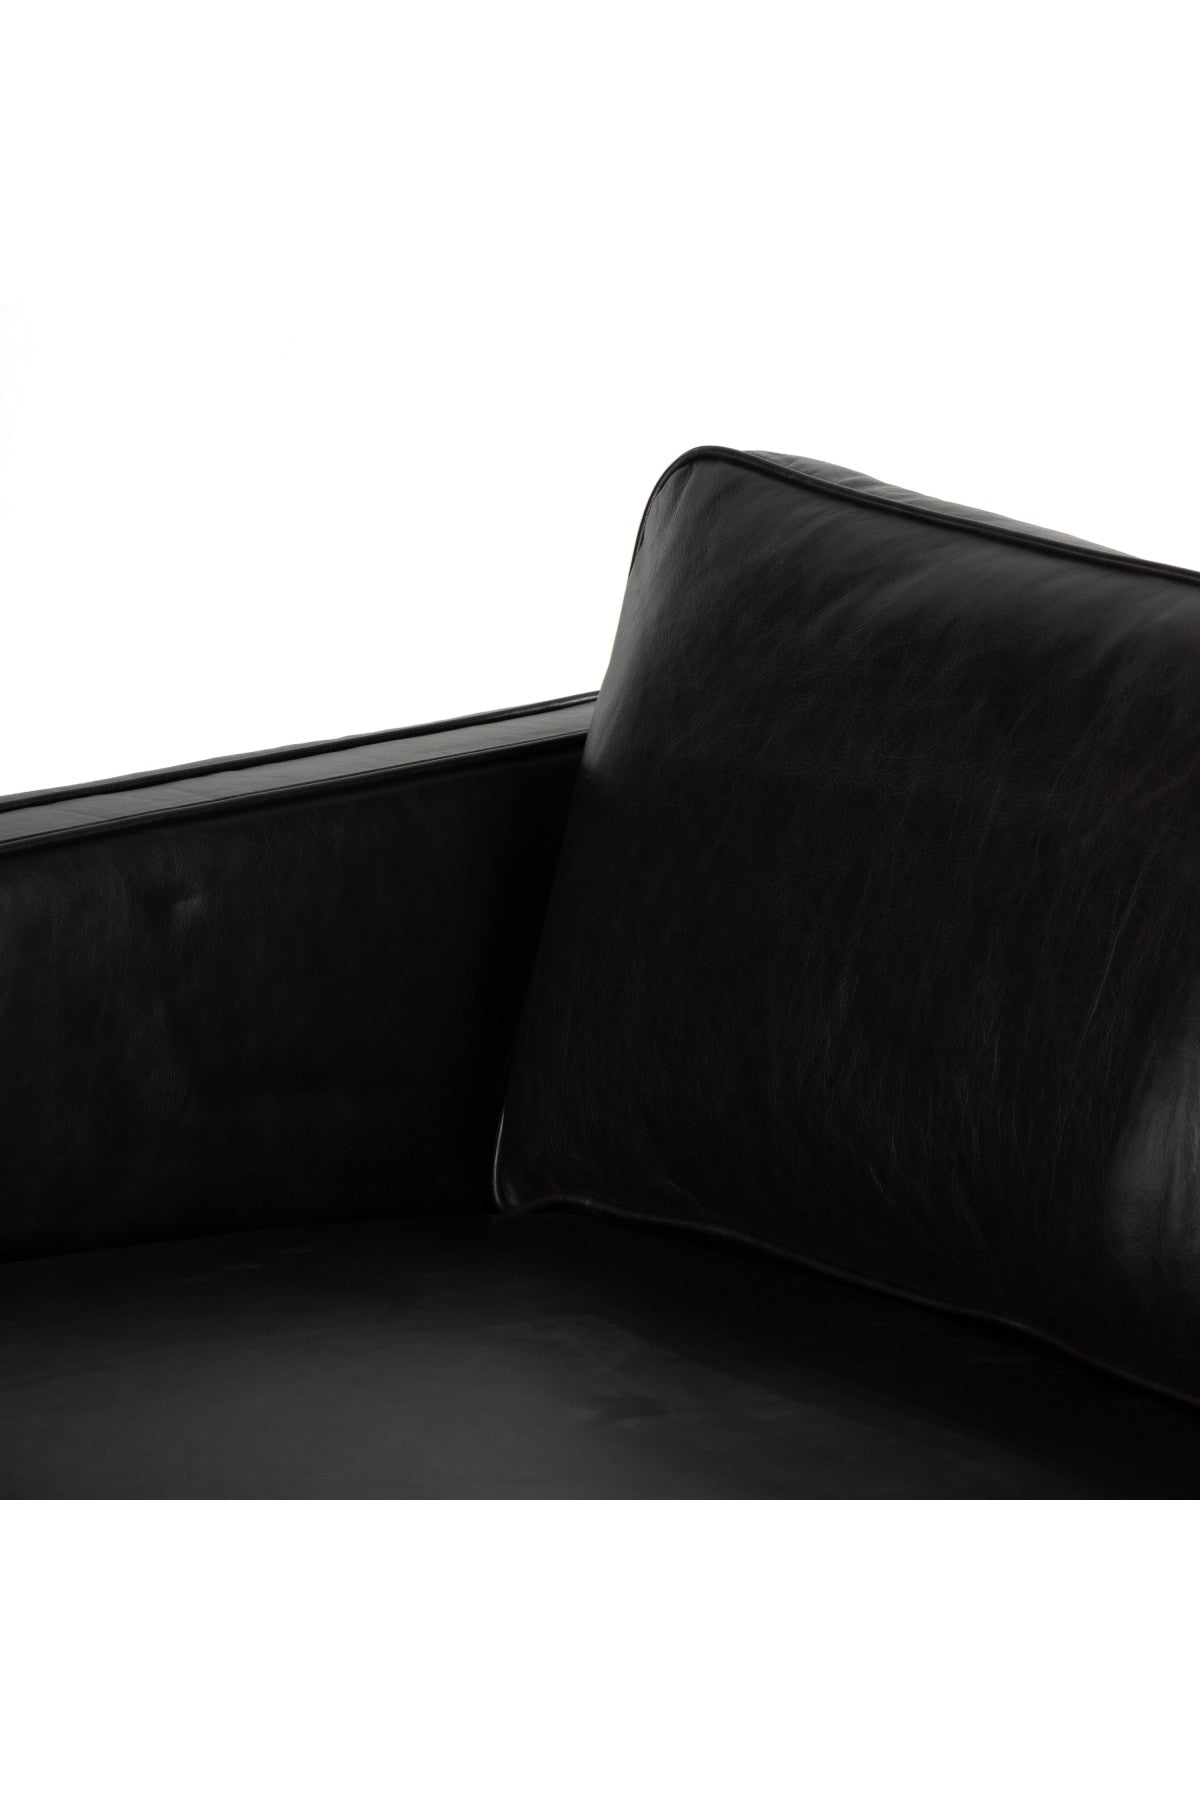 Emily Leather Sofa - 2 Colors